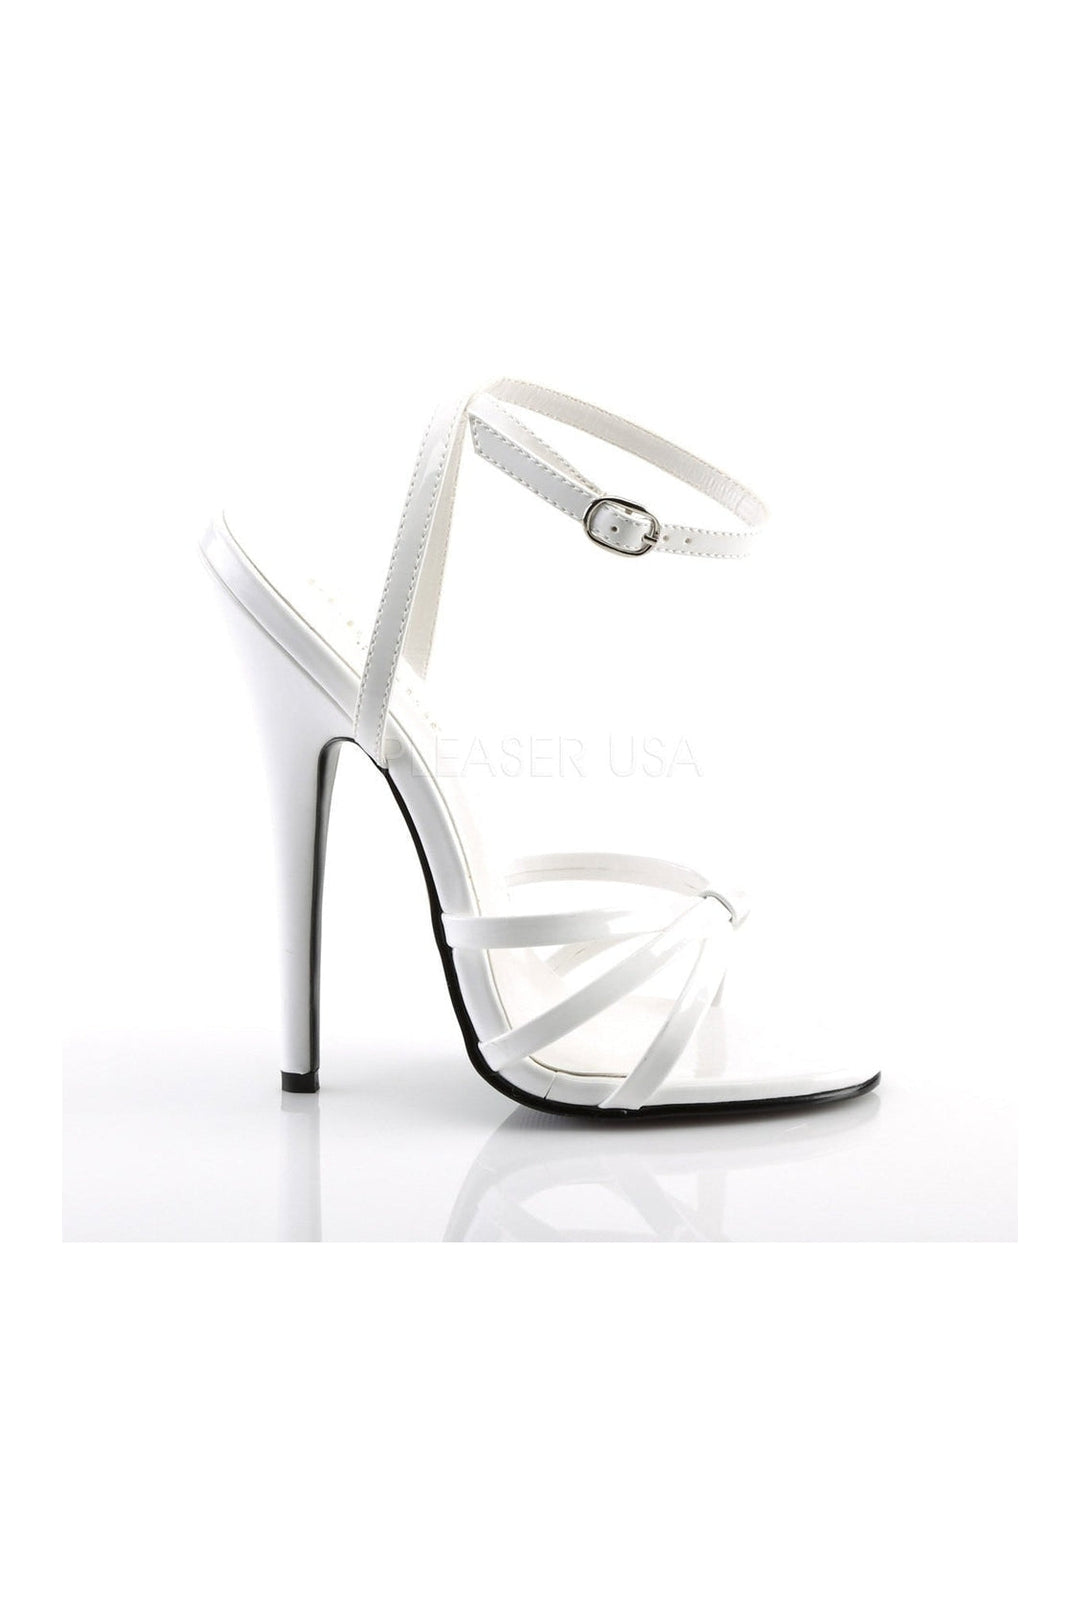 DOMINA-108 Sandal | White Patent-Devious-Sandals-SEXYSHOES.COM